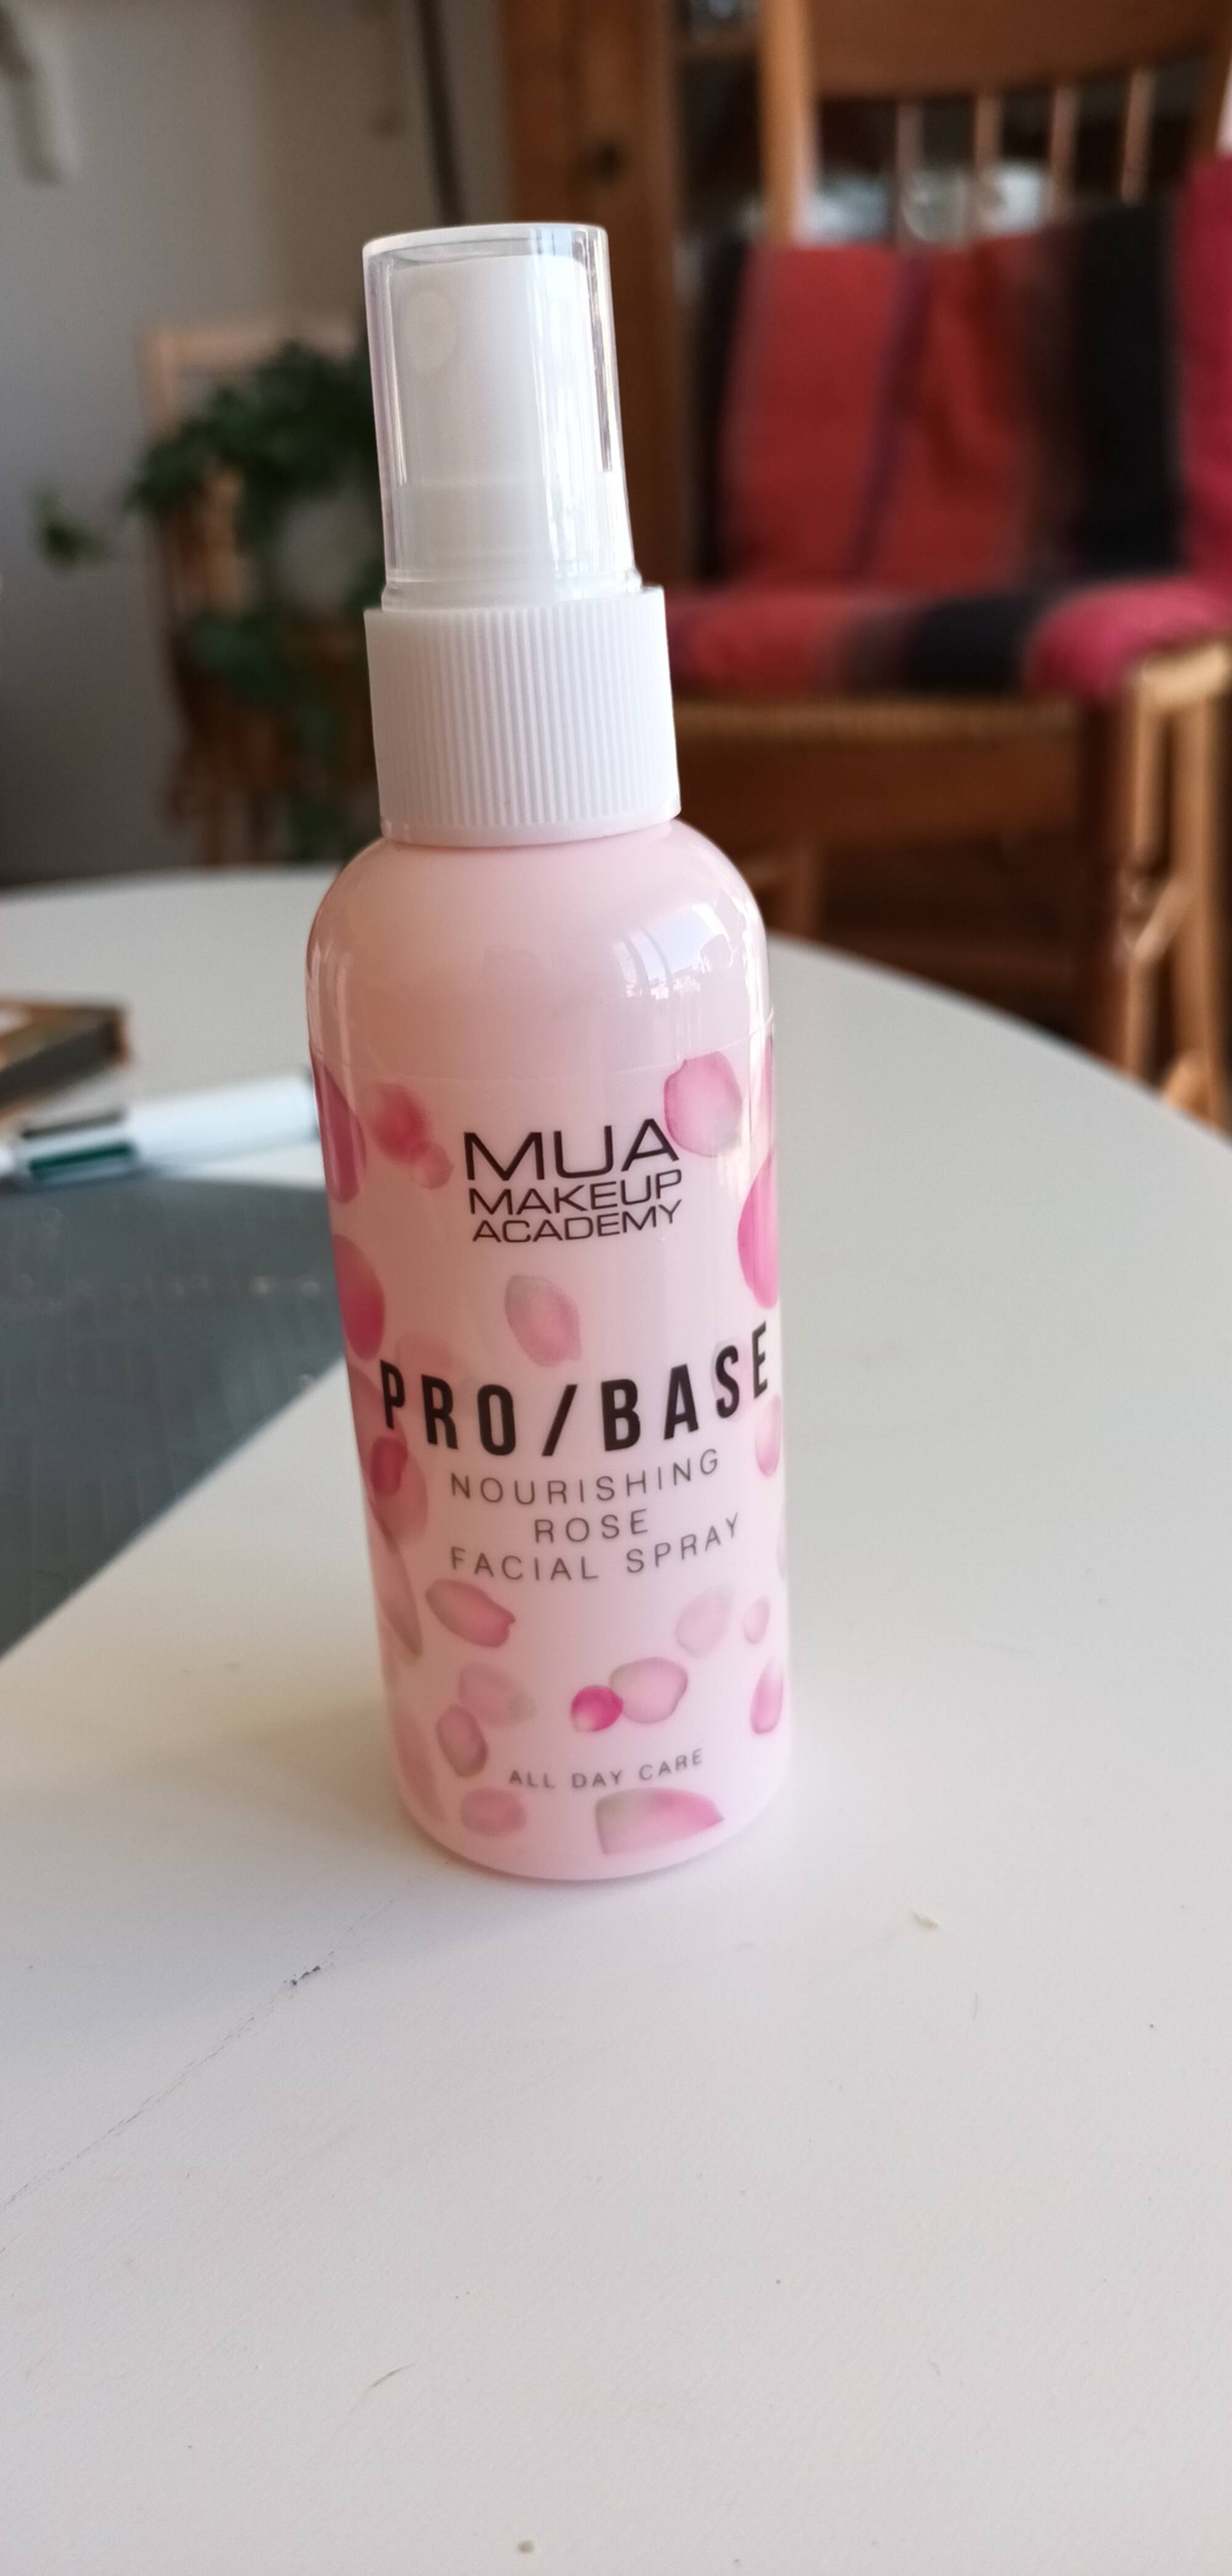 MUA MAKEUP ACADEMY - Pro/Base - Nourishing rose facial spray